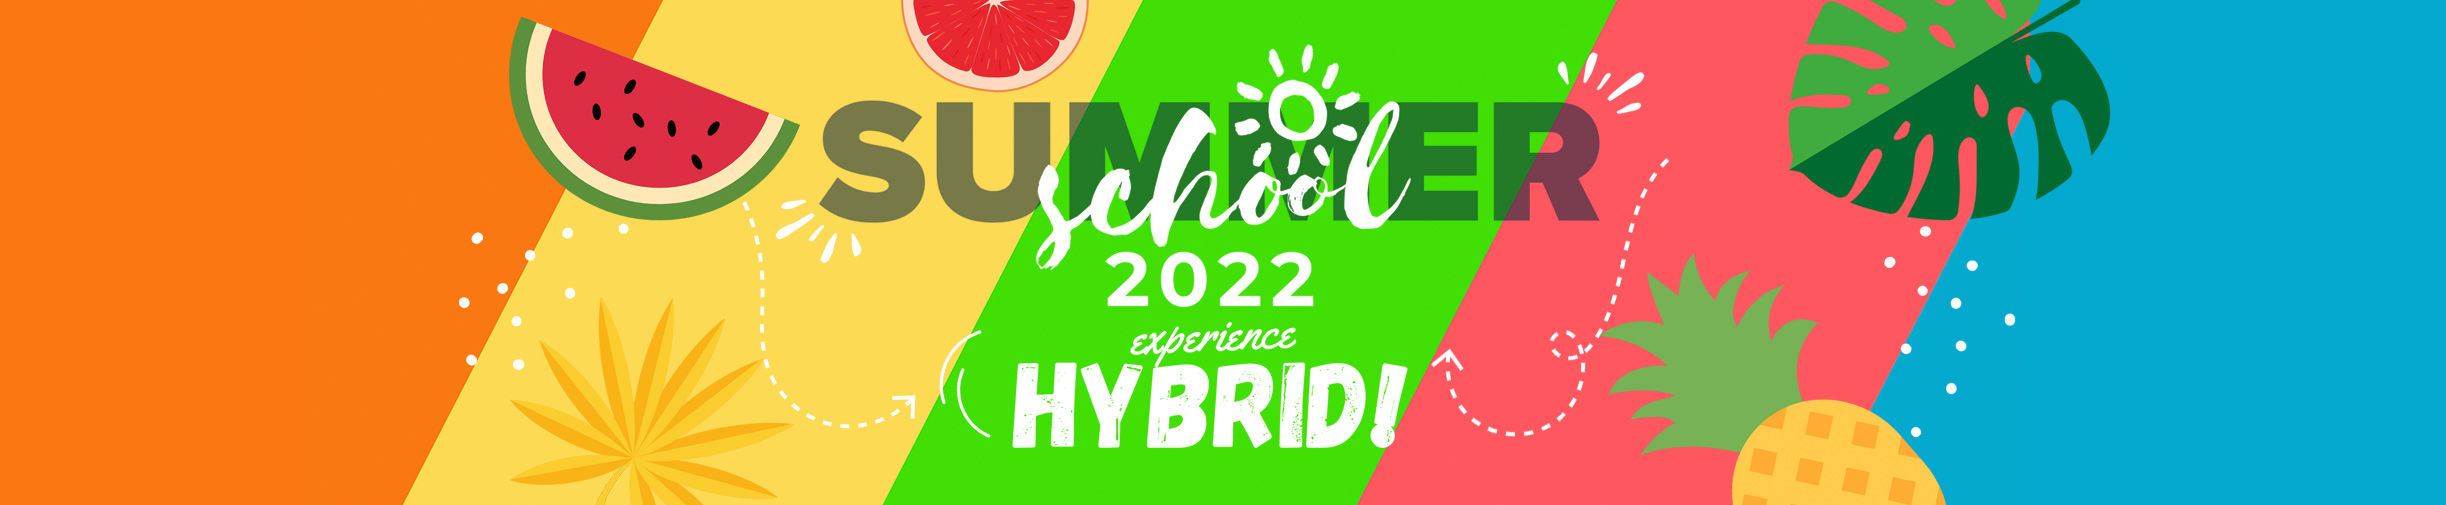 Summer School 2022 banner